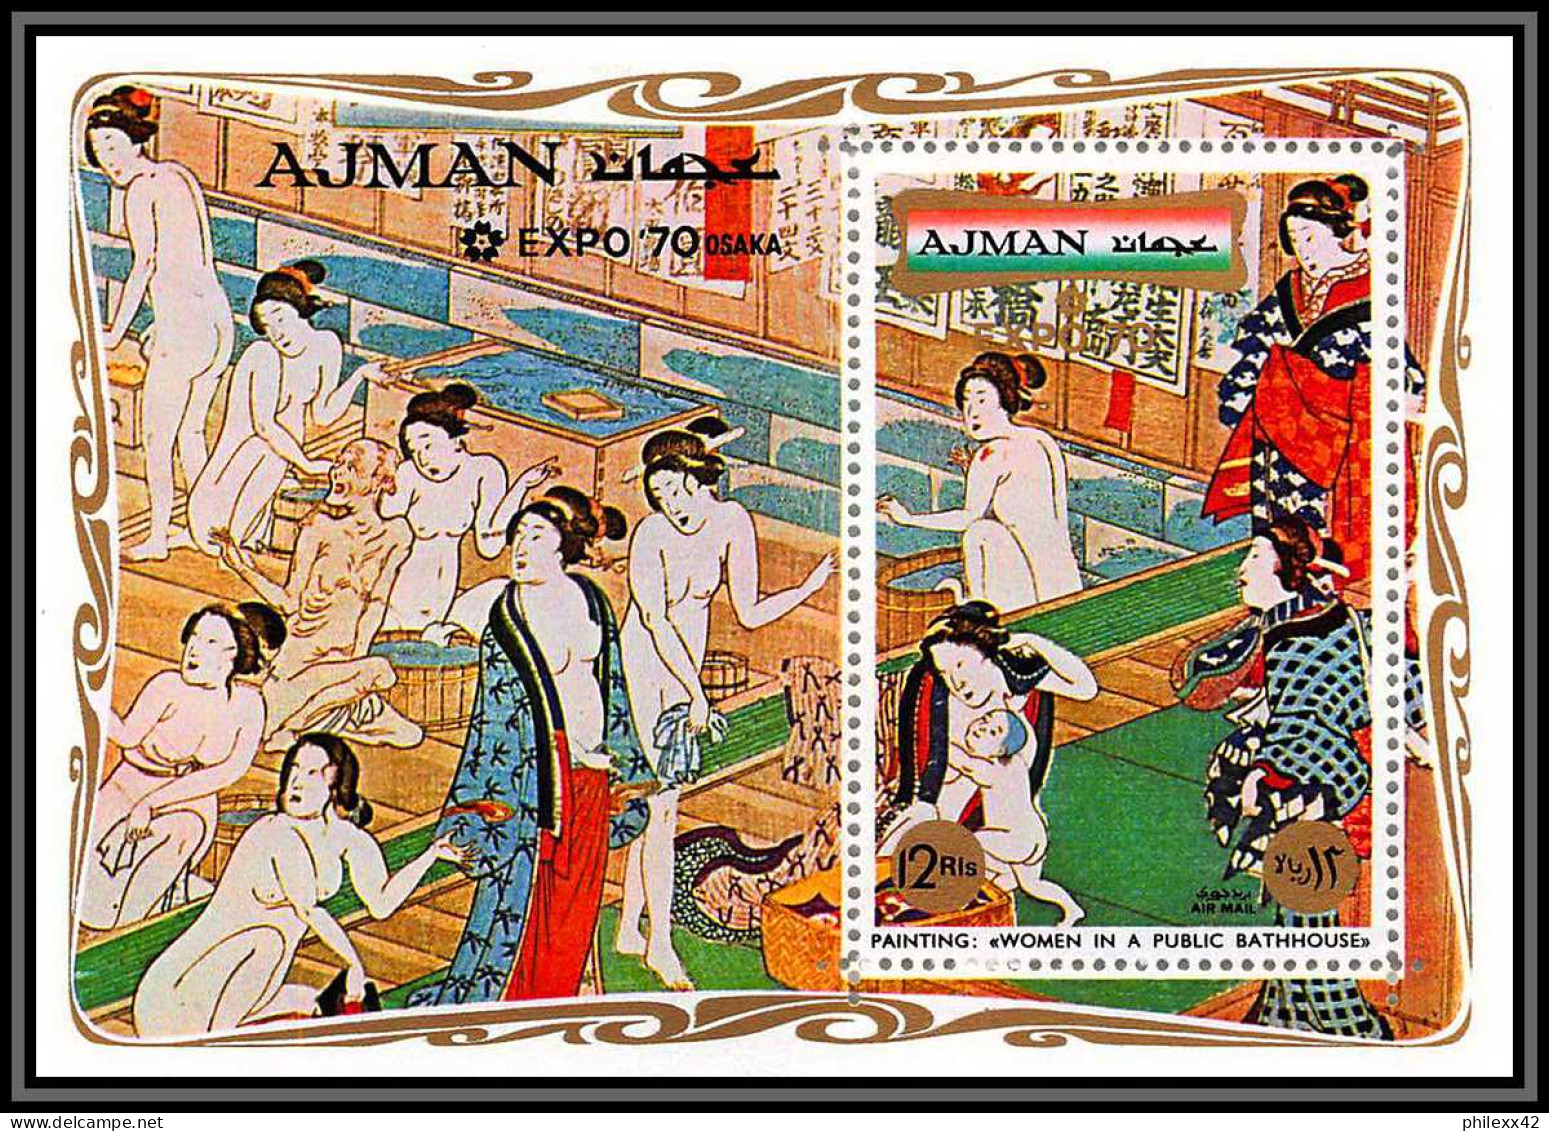 Ajman - 2714/ Bloc N°190 A Expo 70 Japon Japan Exposition Universelle Osake 1970 ** MNH Nus Nudes Tableau (Painting) - 1970 – Osaka (Japon)